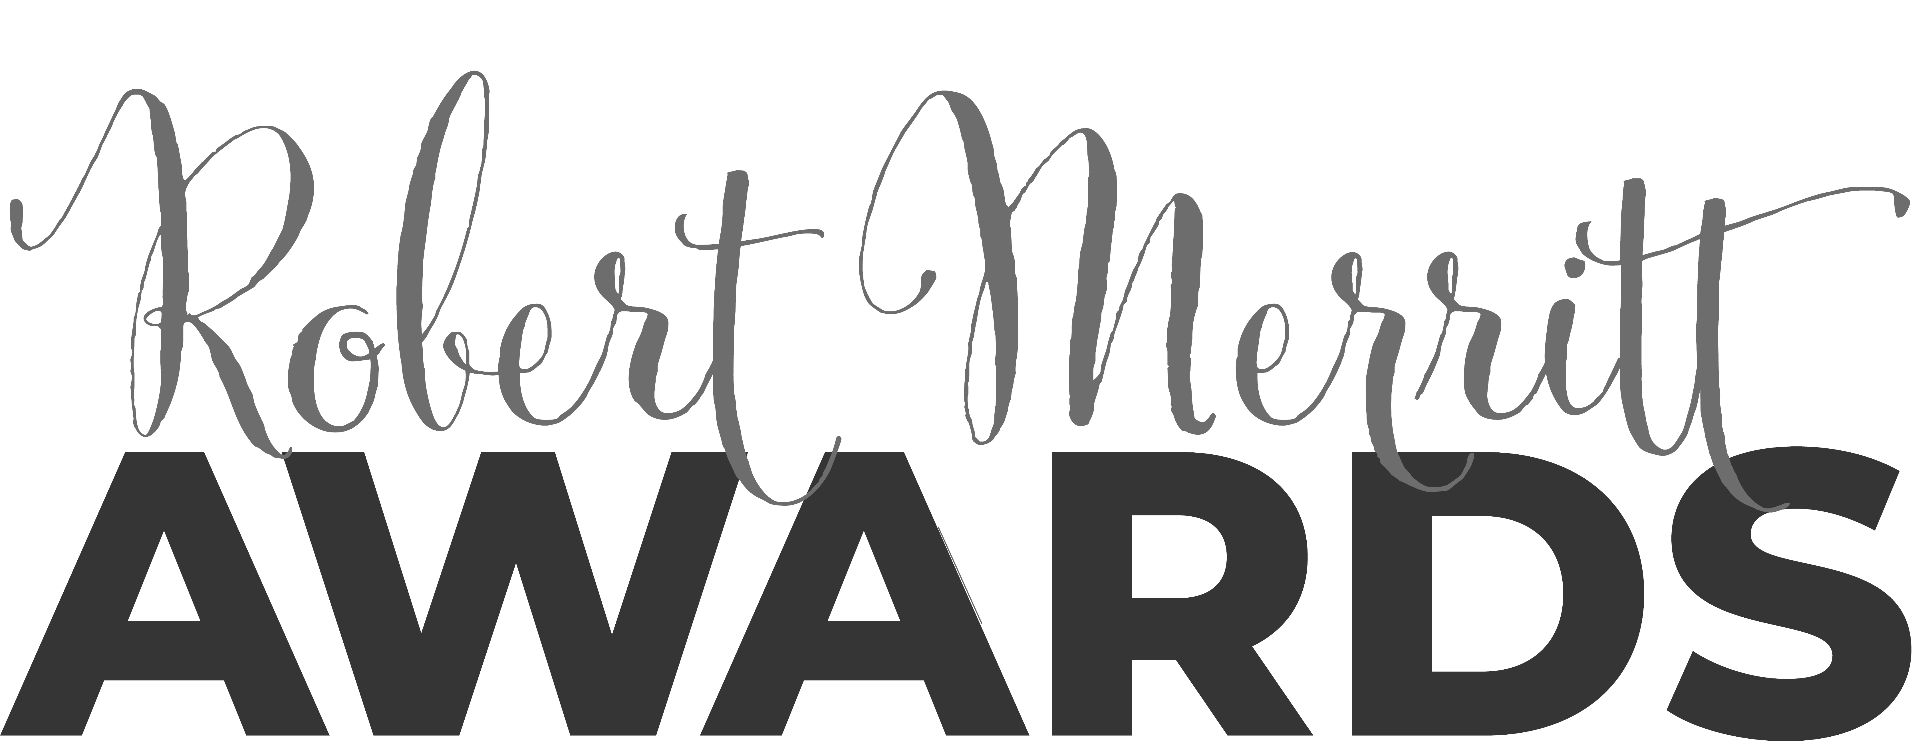 Robert Merritt Awards logo